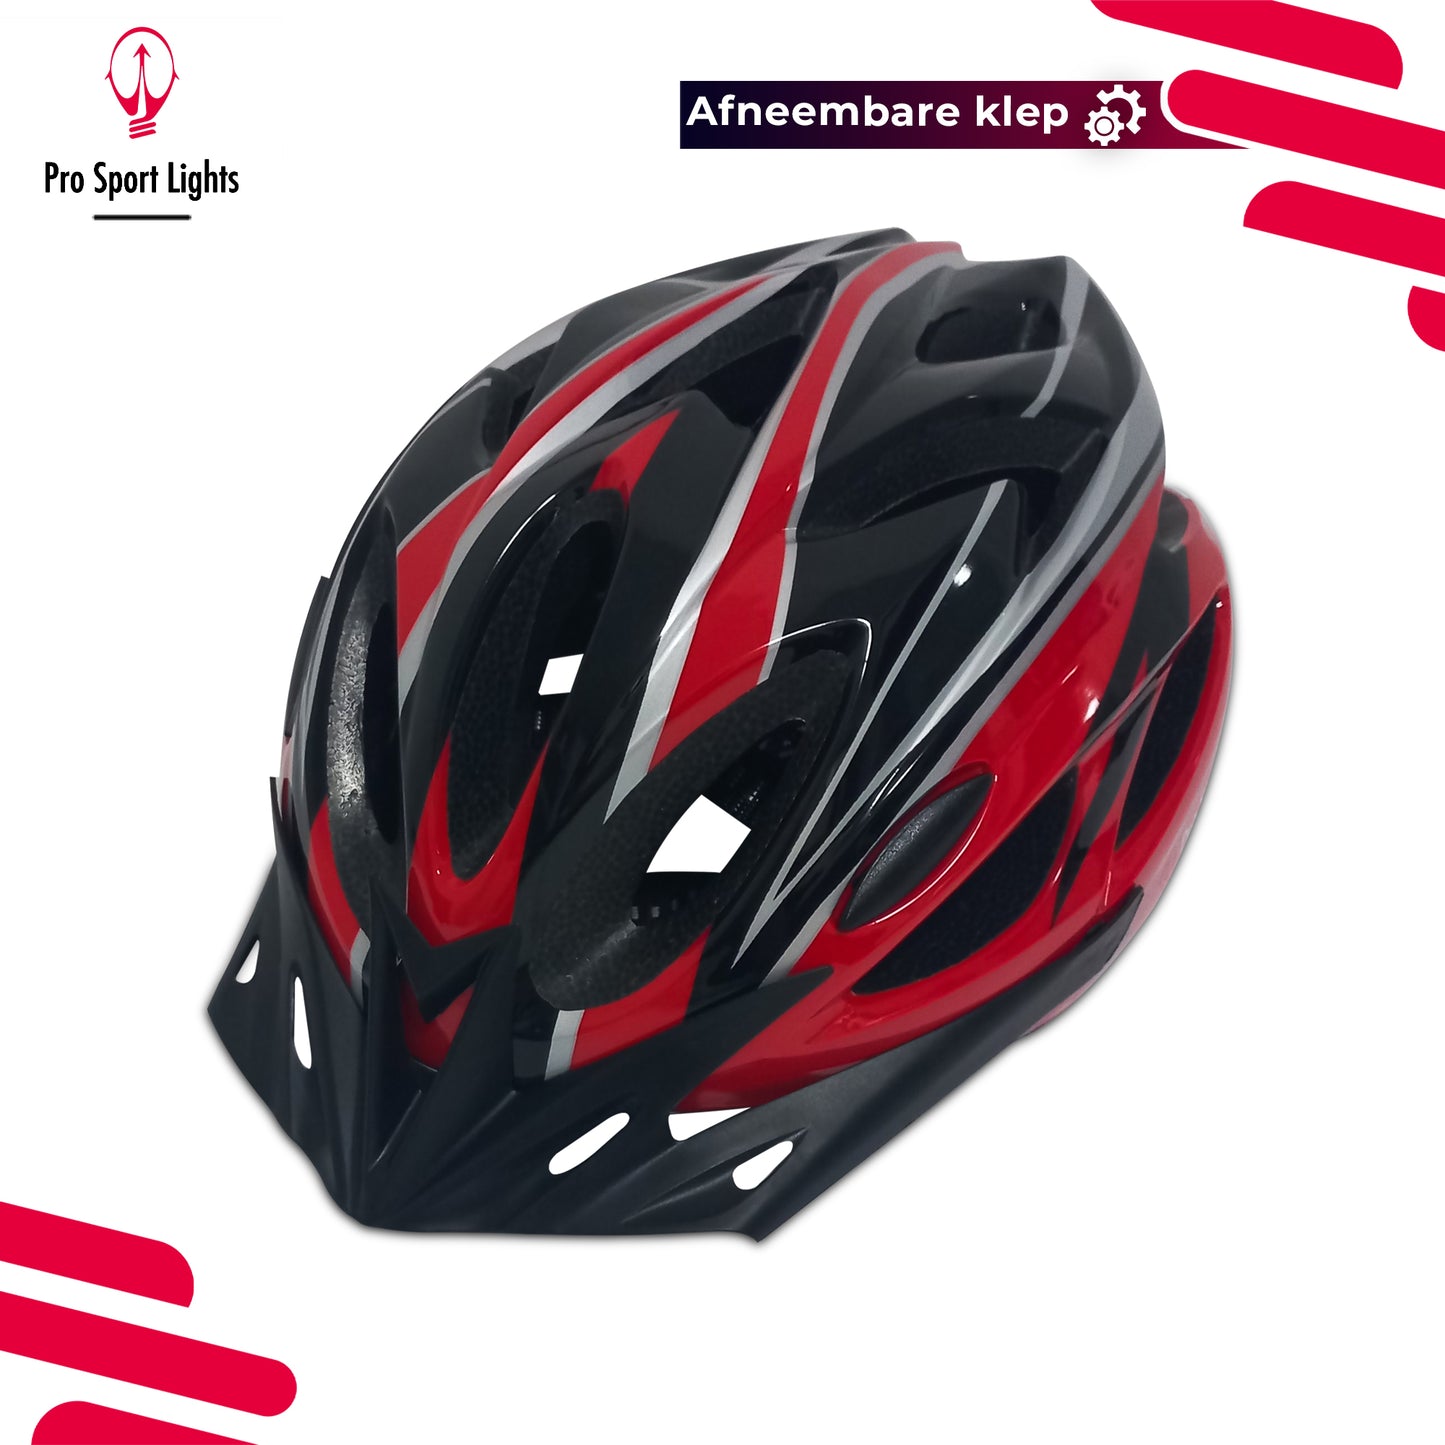 Cycling Helmet Women/Men - Red/Black